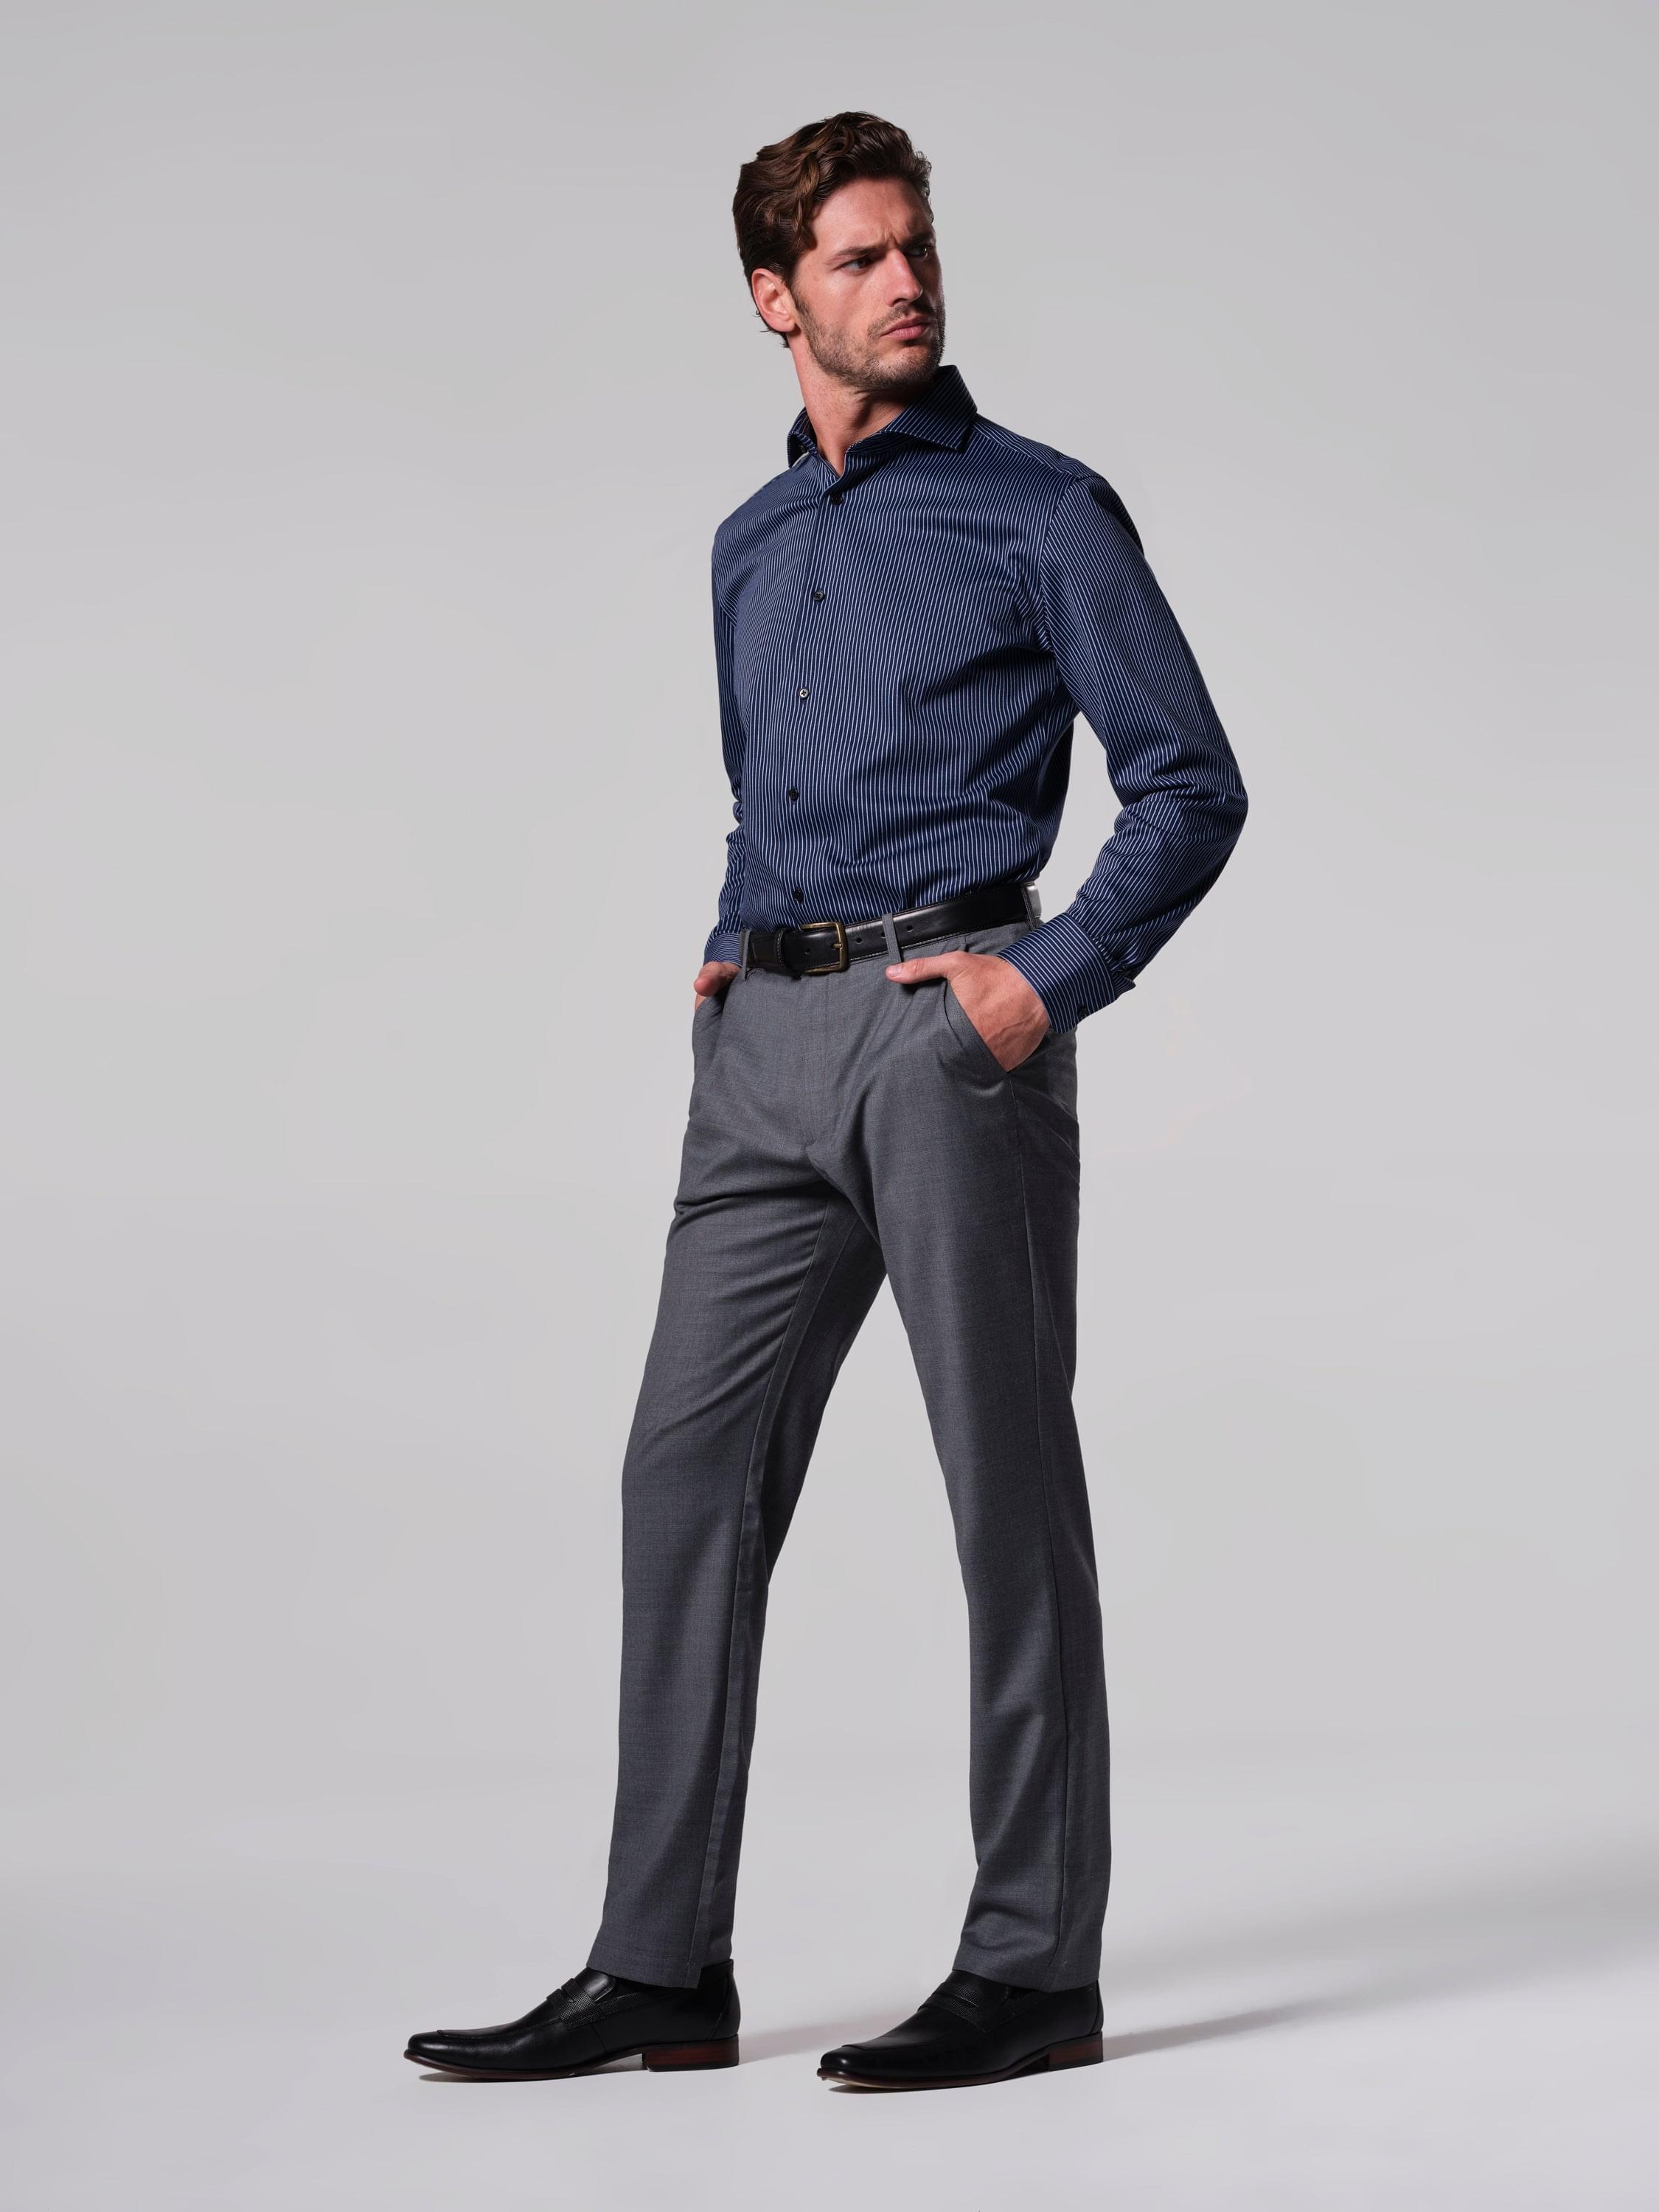 Men Dress Pants,Mens Casual Plaid Stretch Flat-Front Skinny Business Pencil  Long Pants Trousers with Pockets - Walmart.com